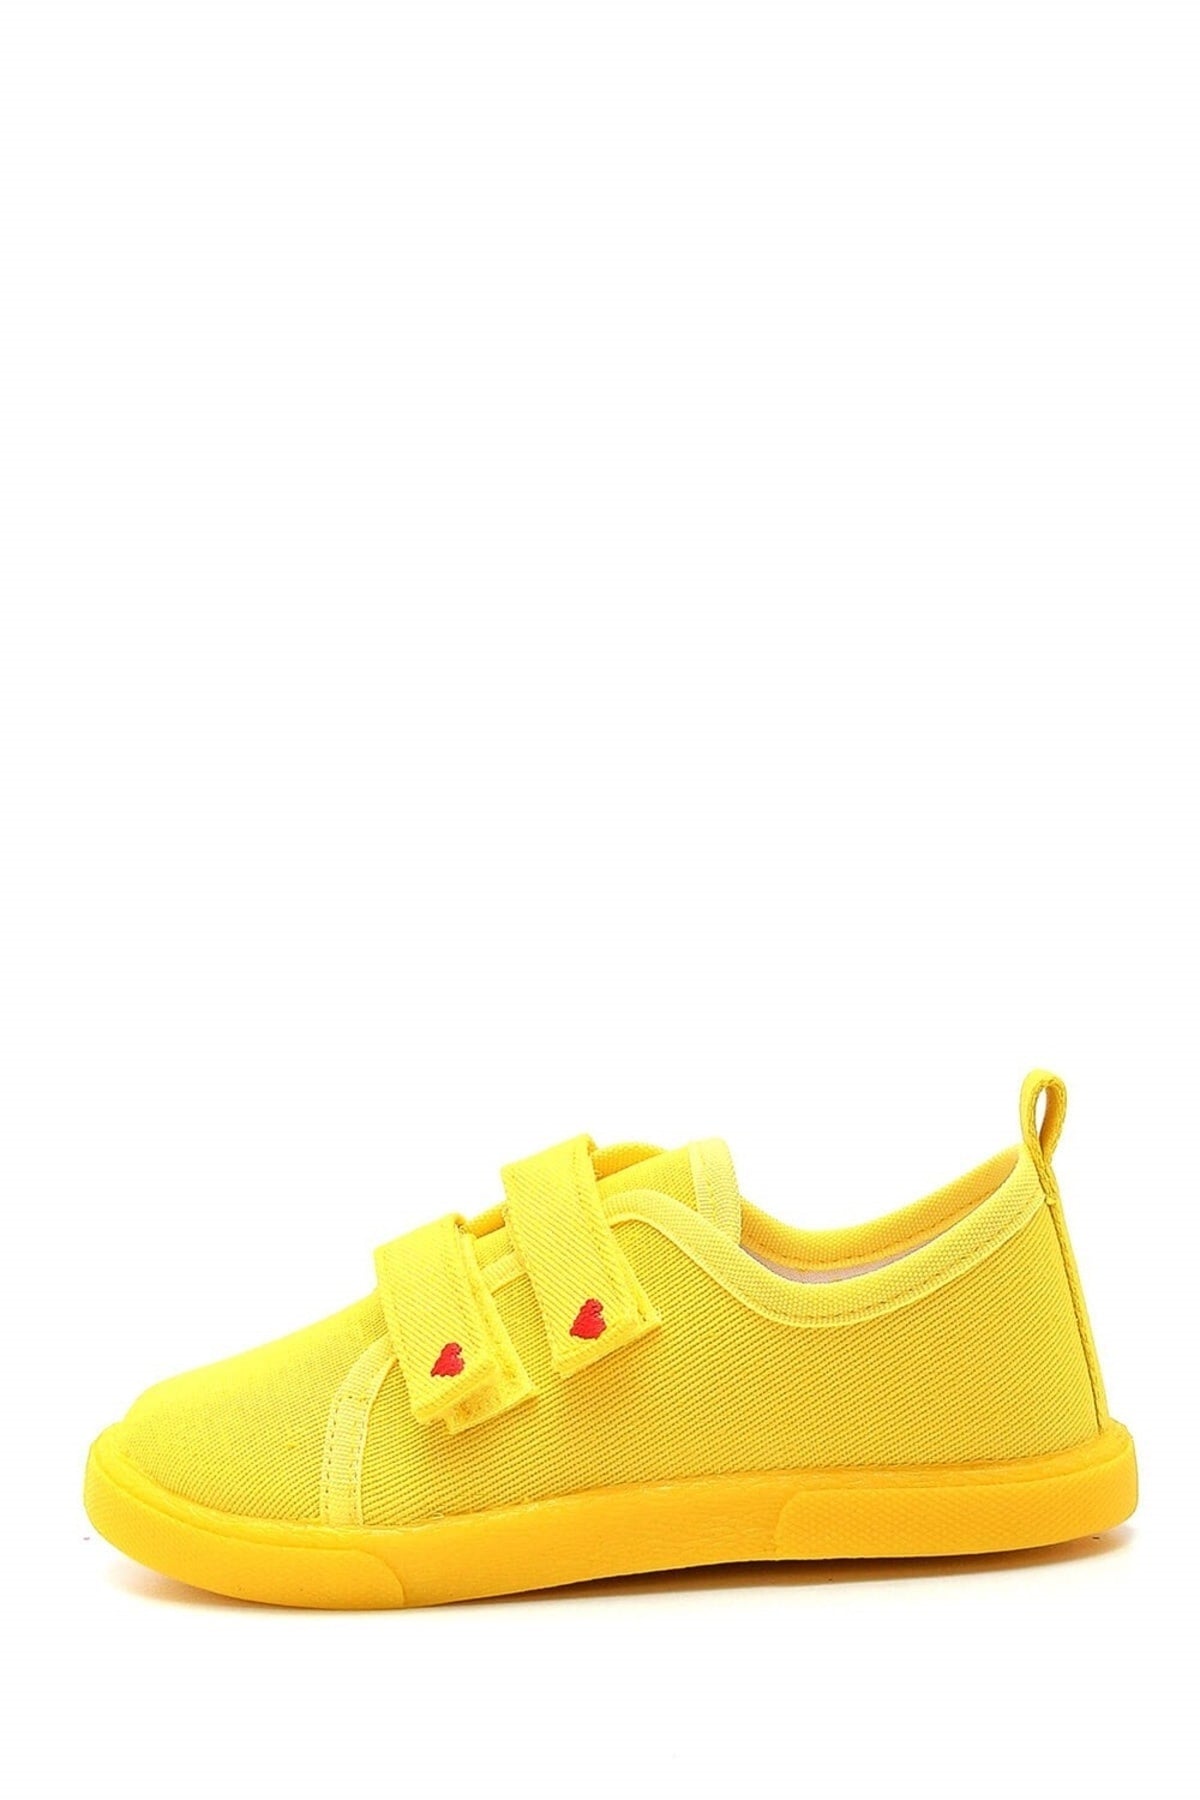 Double Velcro Heart Kids Linen Sneakers-yellow-f-499